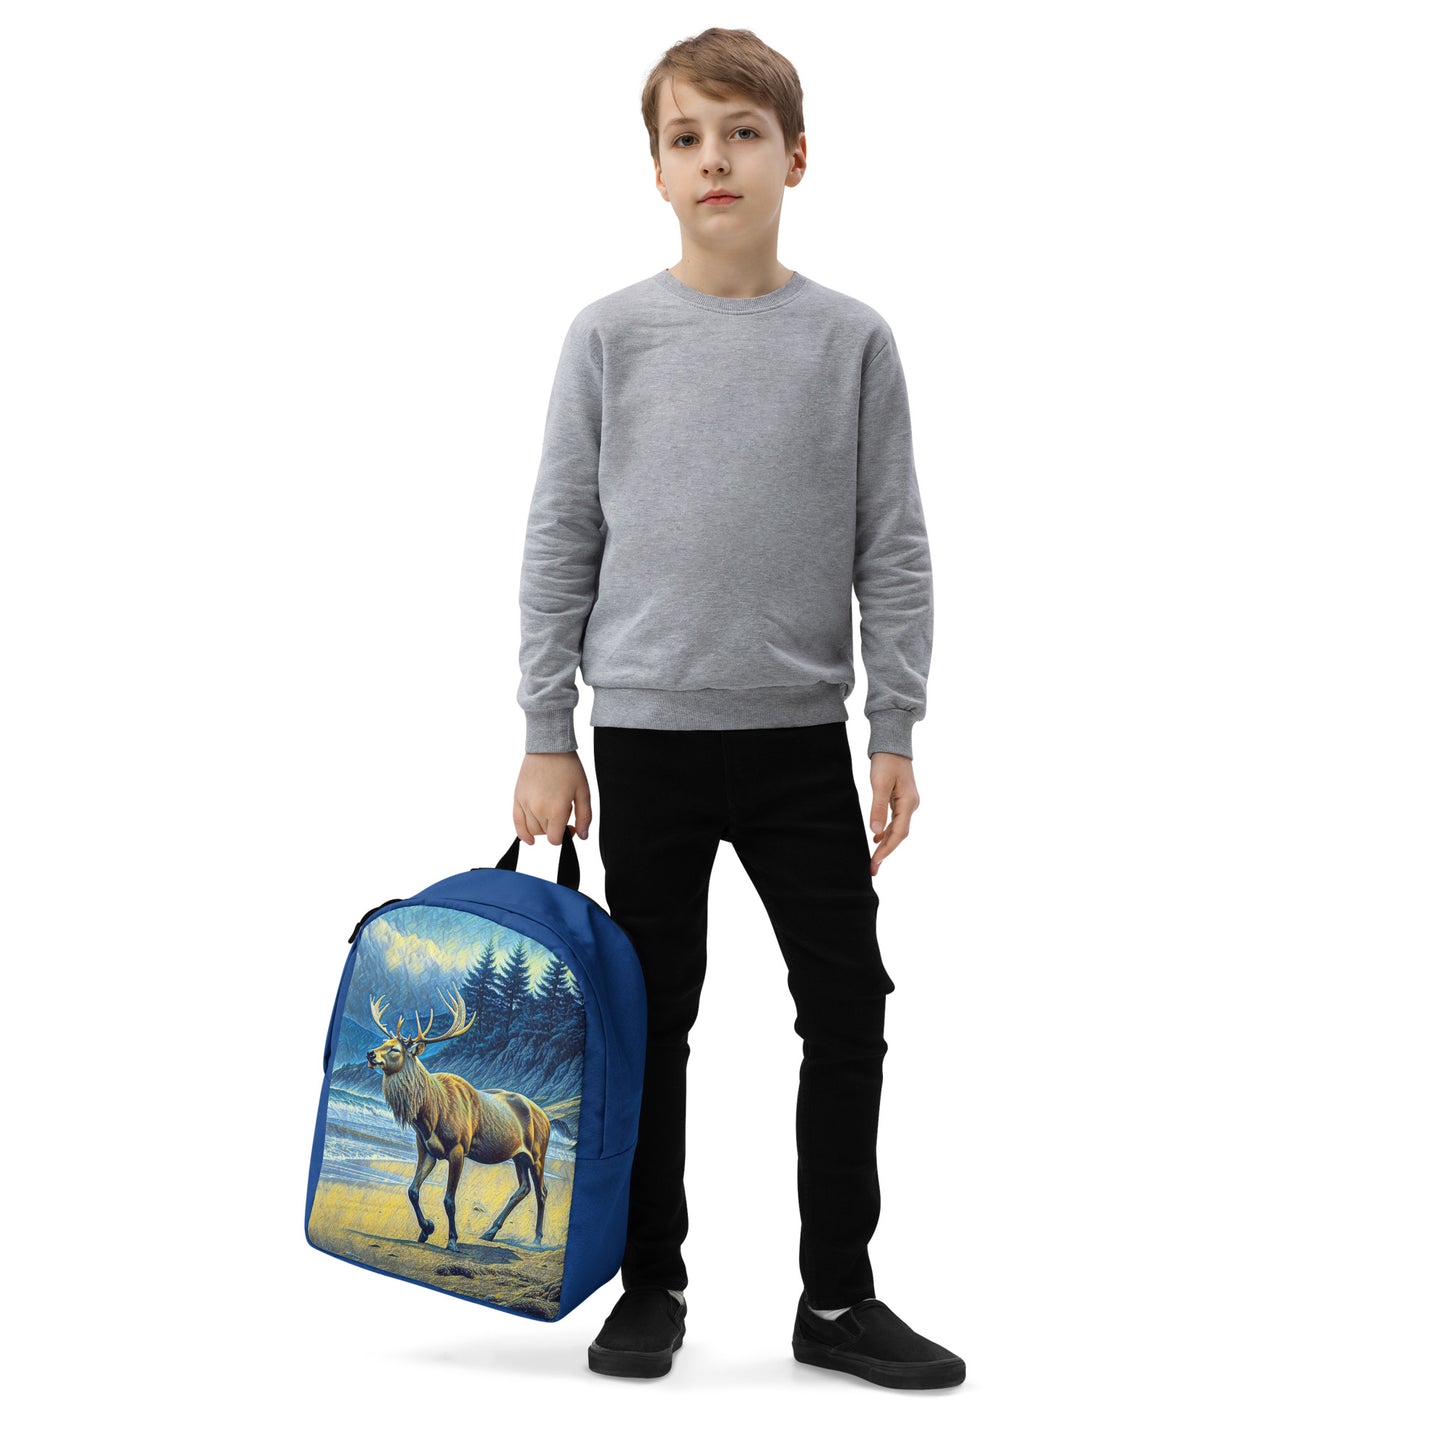 Elk on the Beach - Digital Art - Minimalist Backpack